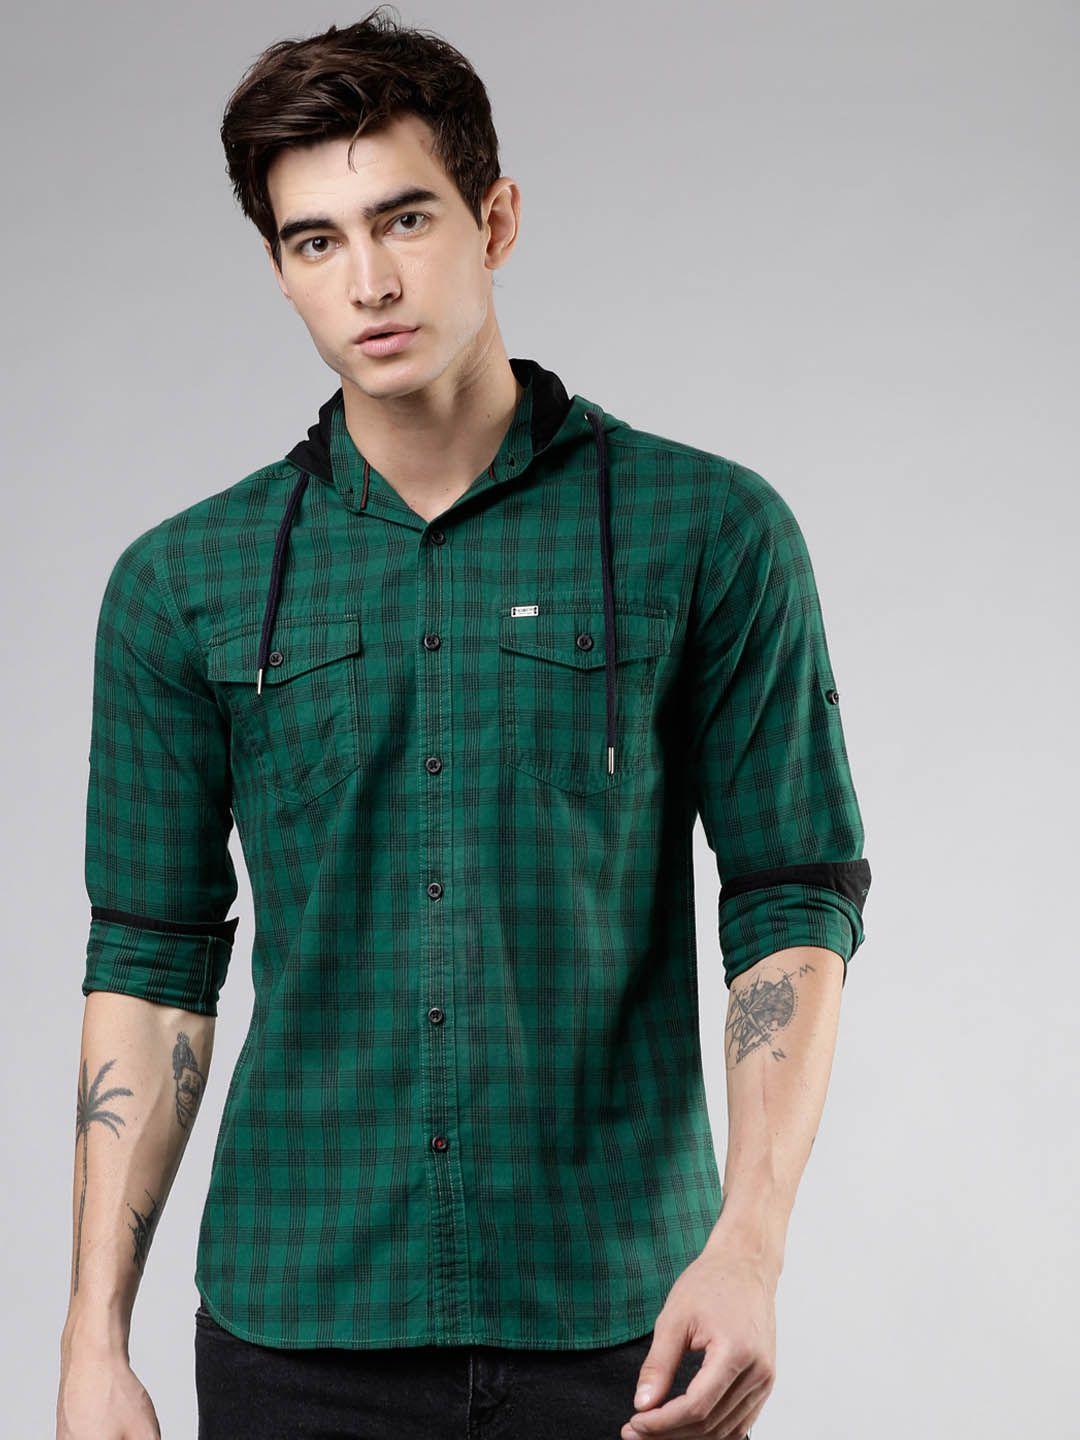 locomotive-men-green-&-black-slim-fit-checked-casual-hooded-shirt